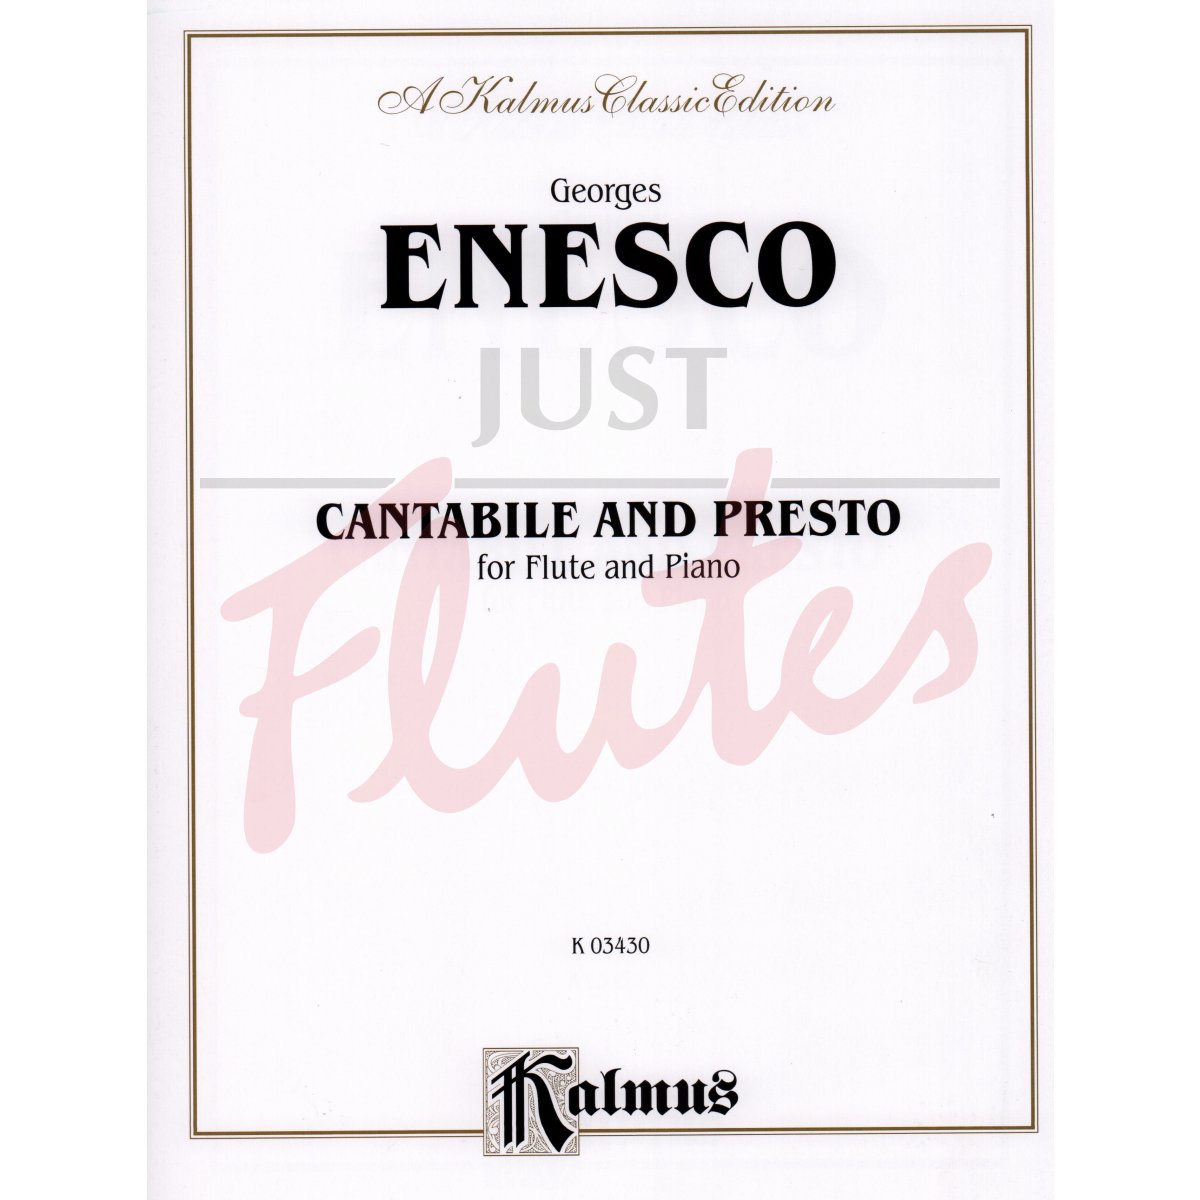 Cantabile and Presto for Flute and Piano